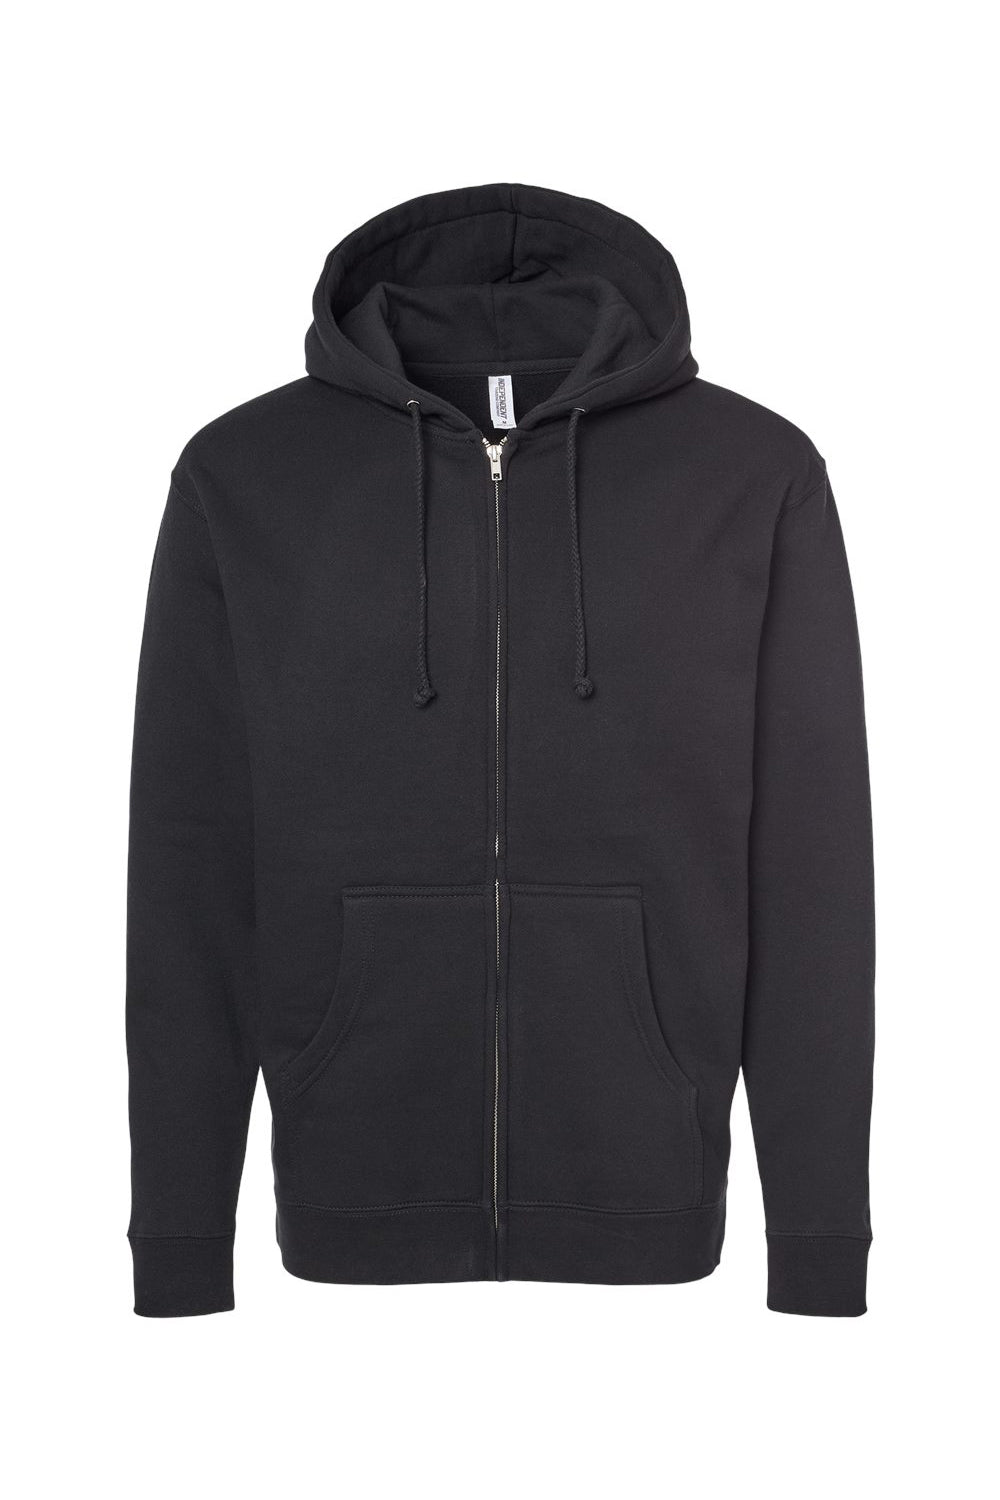 Independent Trading Co. IND4000Z Mens Full Zip Hooded Sweatshirt Hoodie Black Flat Front